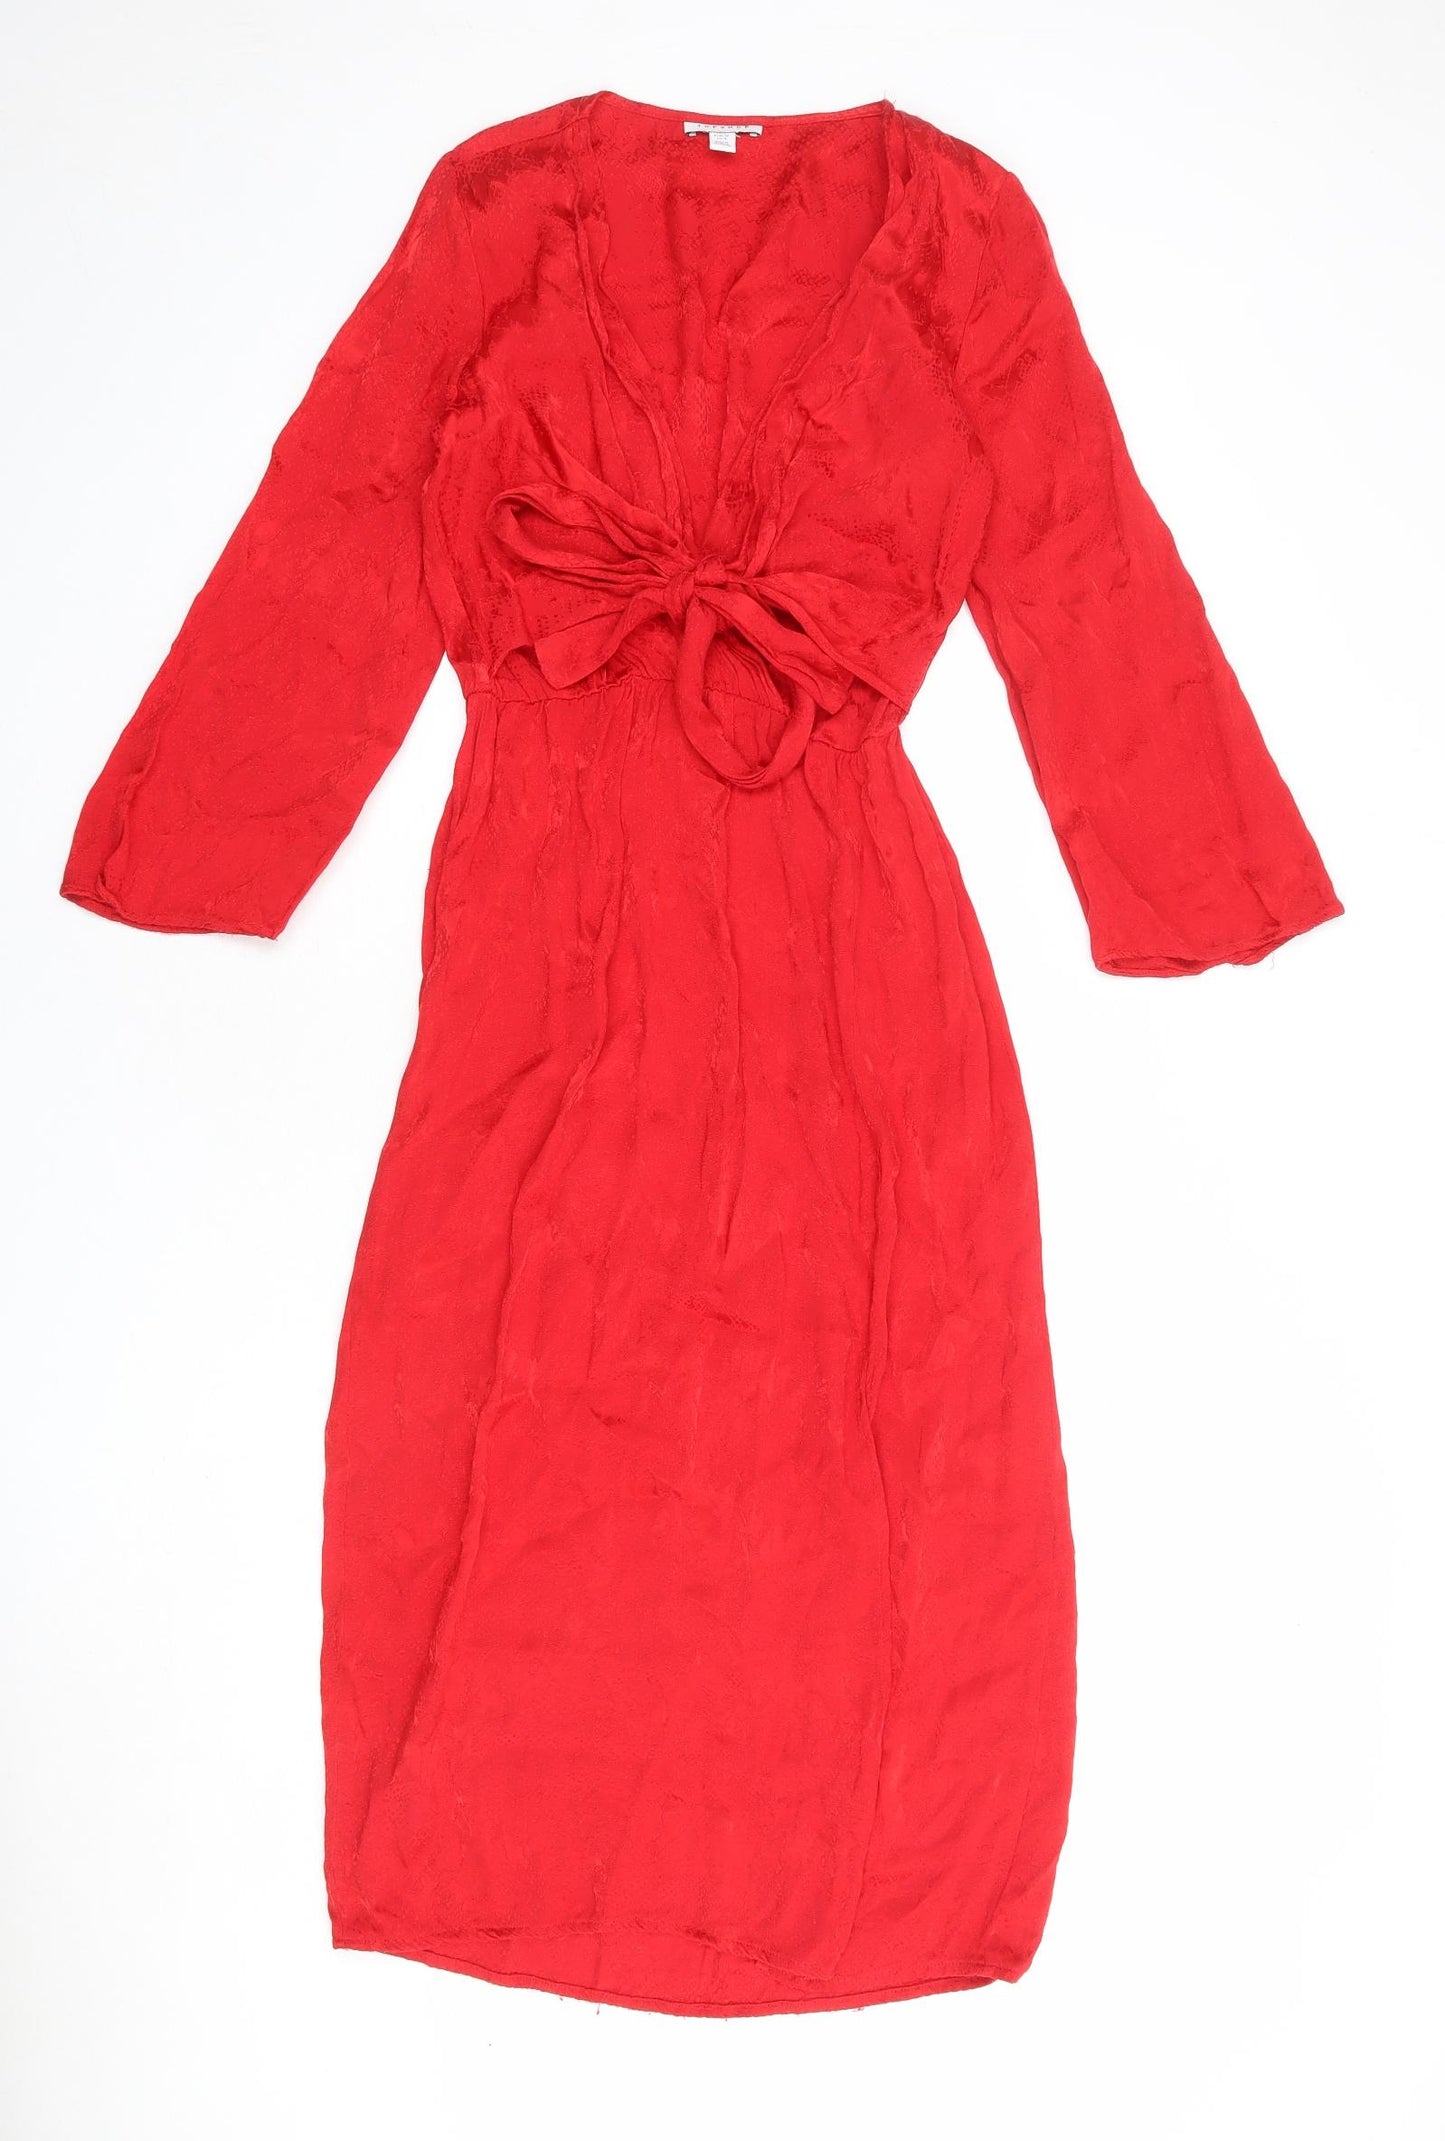 Topshop Womens Red Animal Print Viscose A-Line Size 8 V-Neck Tie - Snake Print